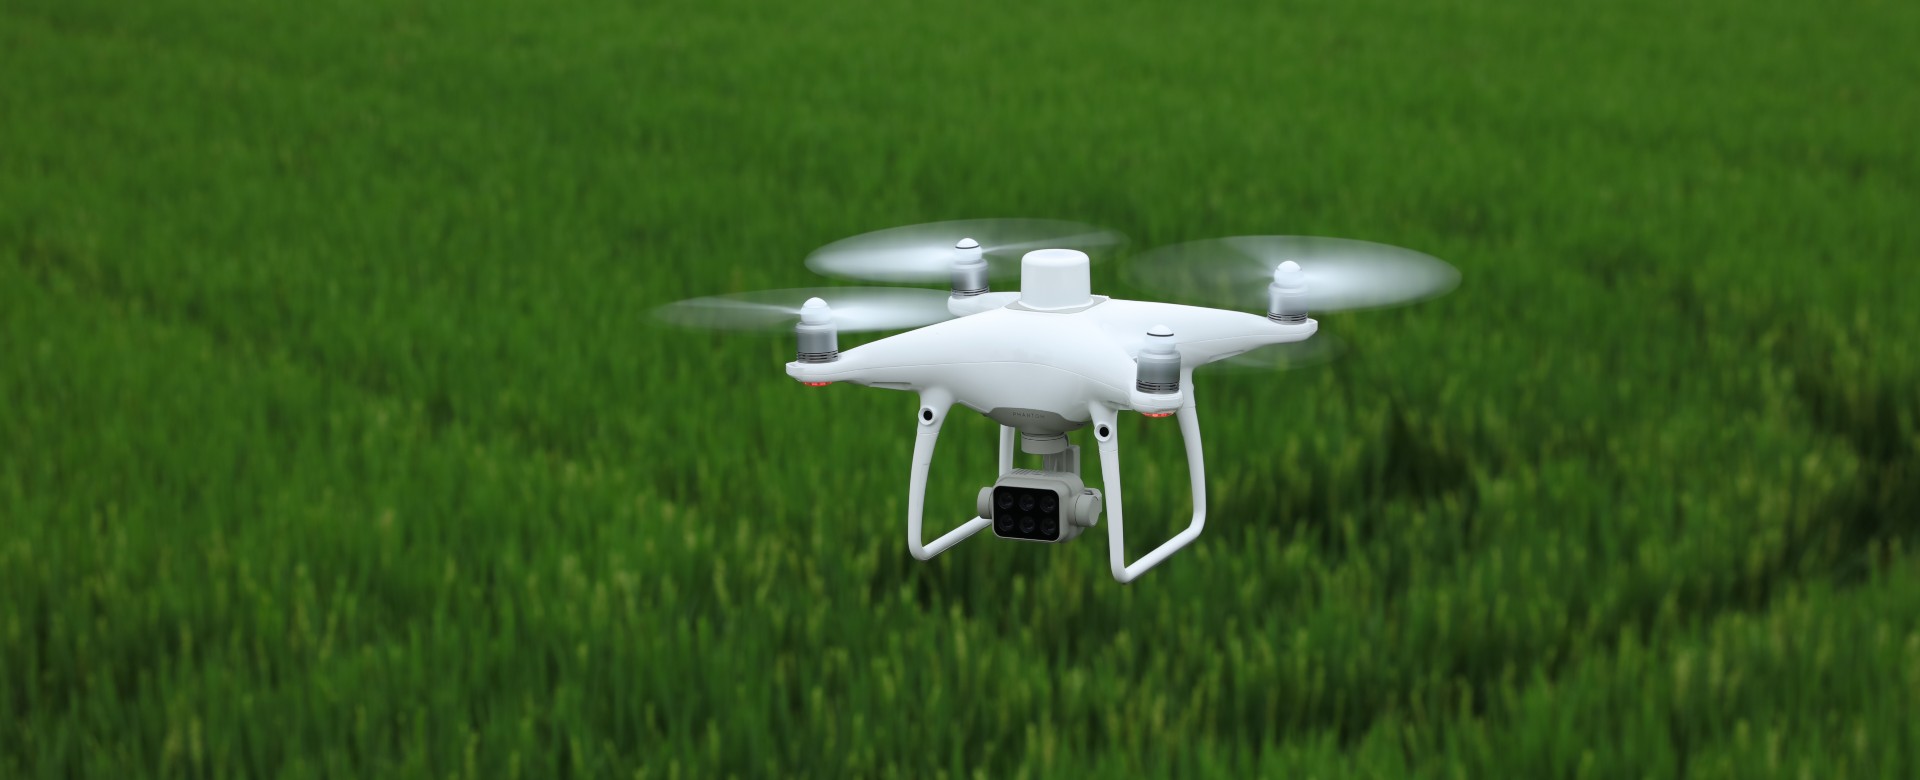 AeroSpray - prikaz drona